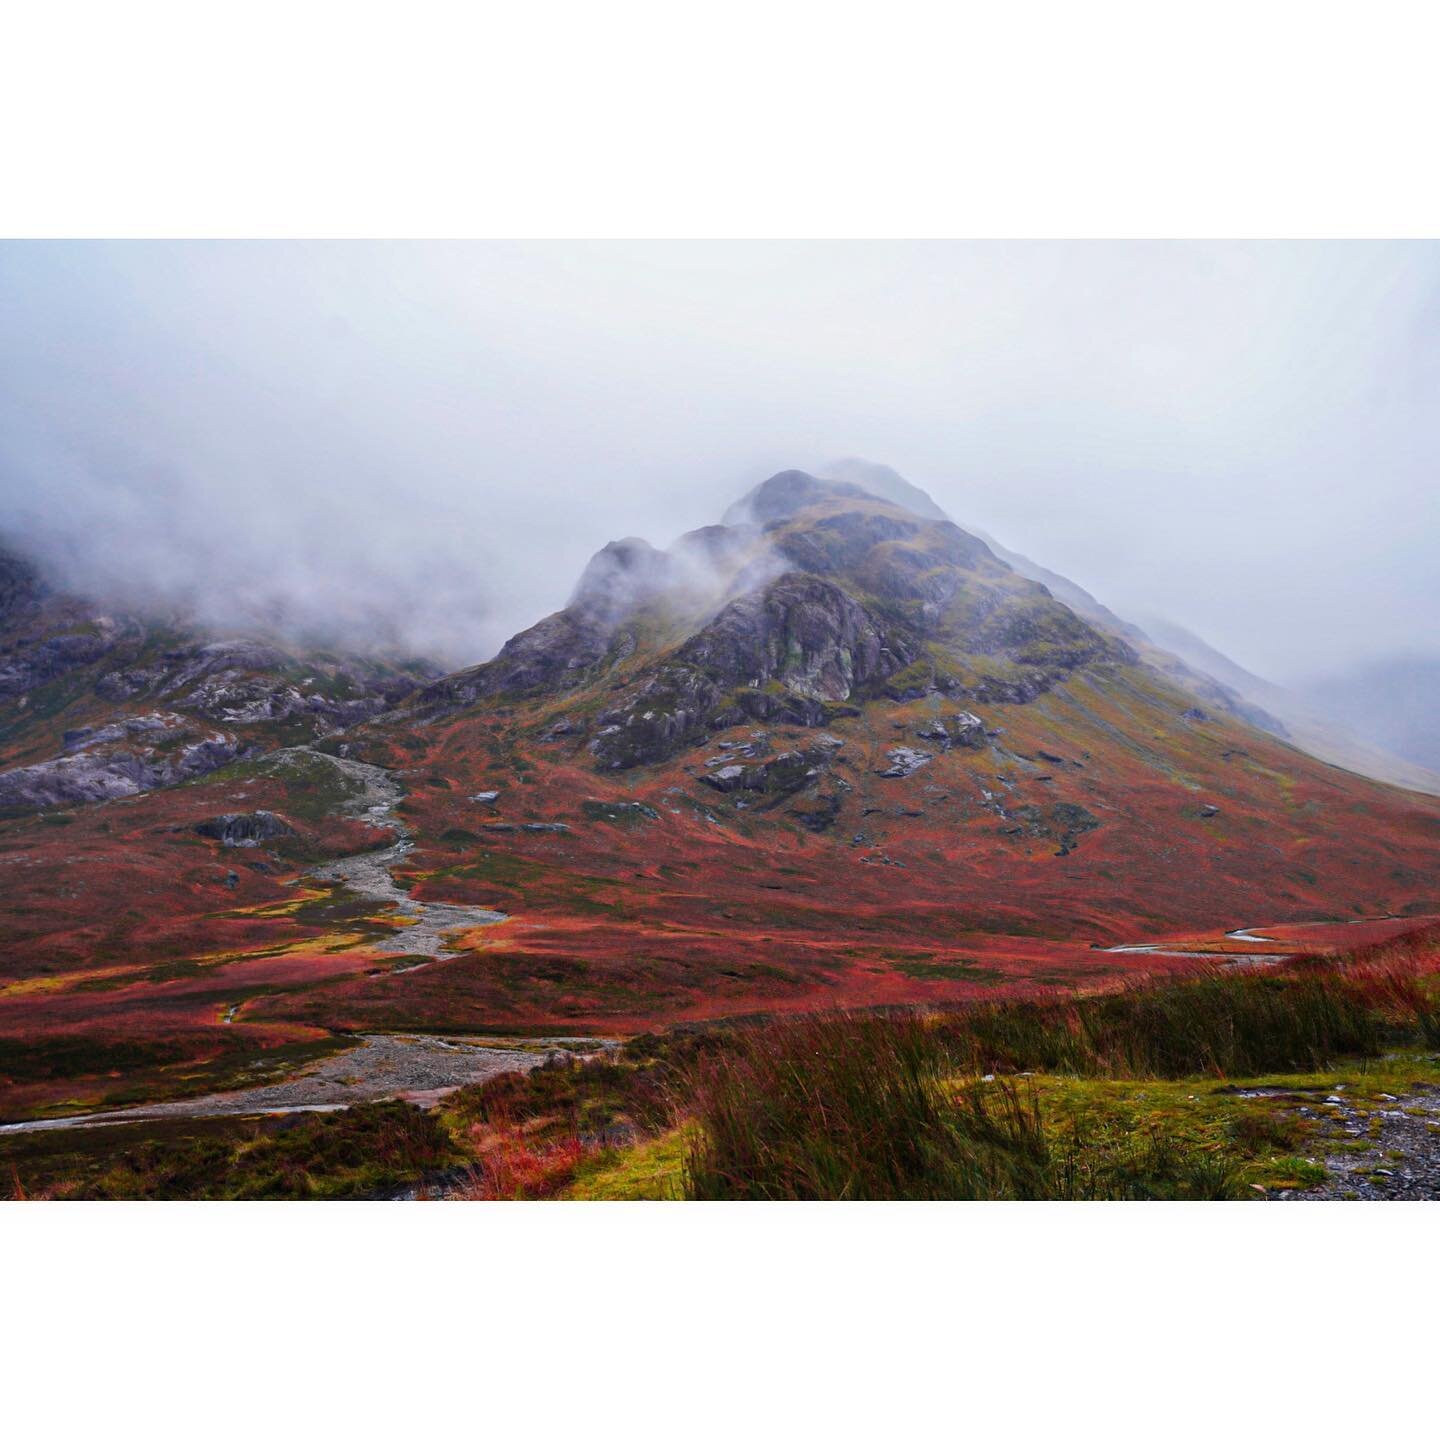 Thankful I had the opportunity to experience this place! 🍁🏴󠁧󠁢󠁳󠁣󠁴󠁿

#scotlandlover #scotland #scotlandshots #scotlandsbeauty #glencoe #foggymorning #fog #naturephotography #hikingadventures #scottishhighlands #hiddenscotland